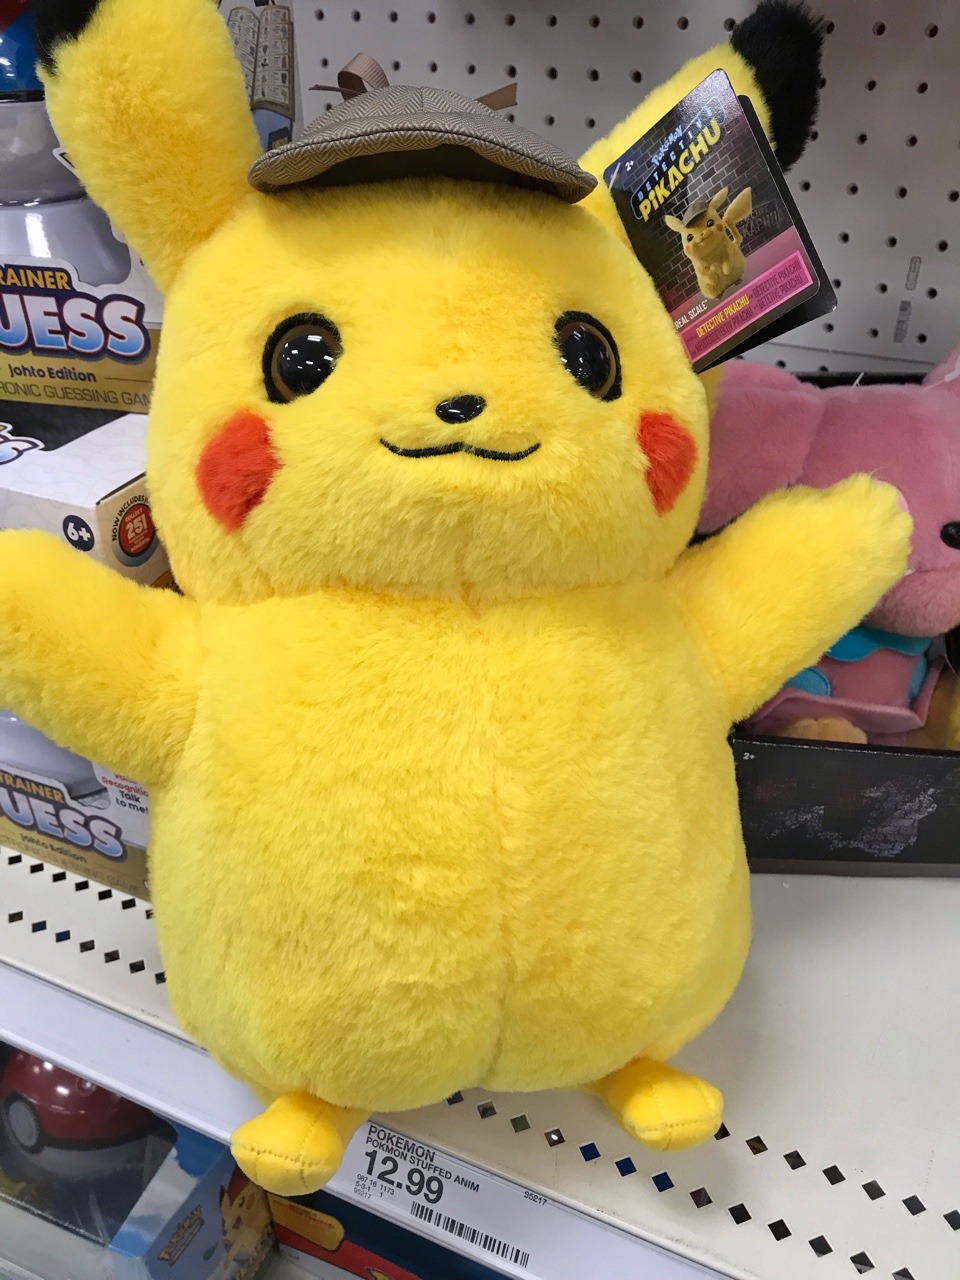 detective pikachu toys target